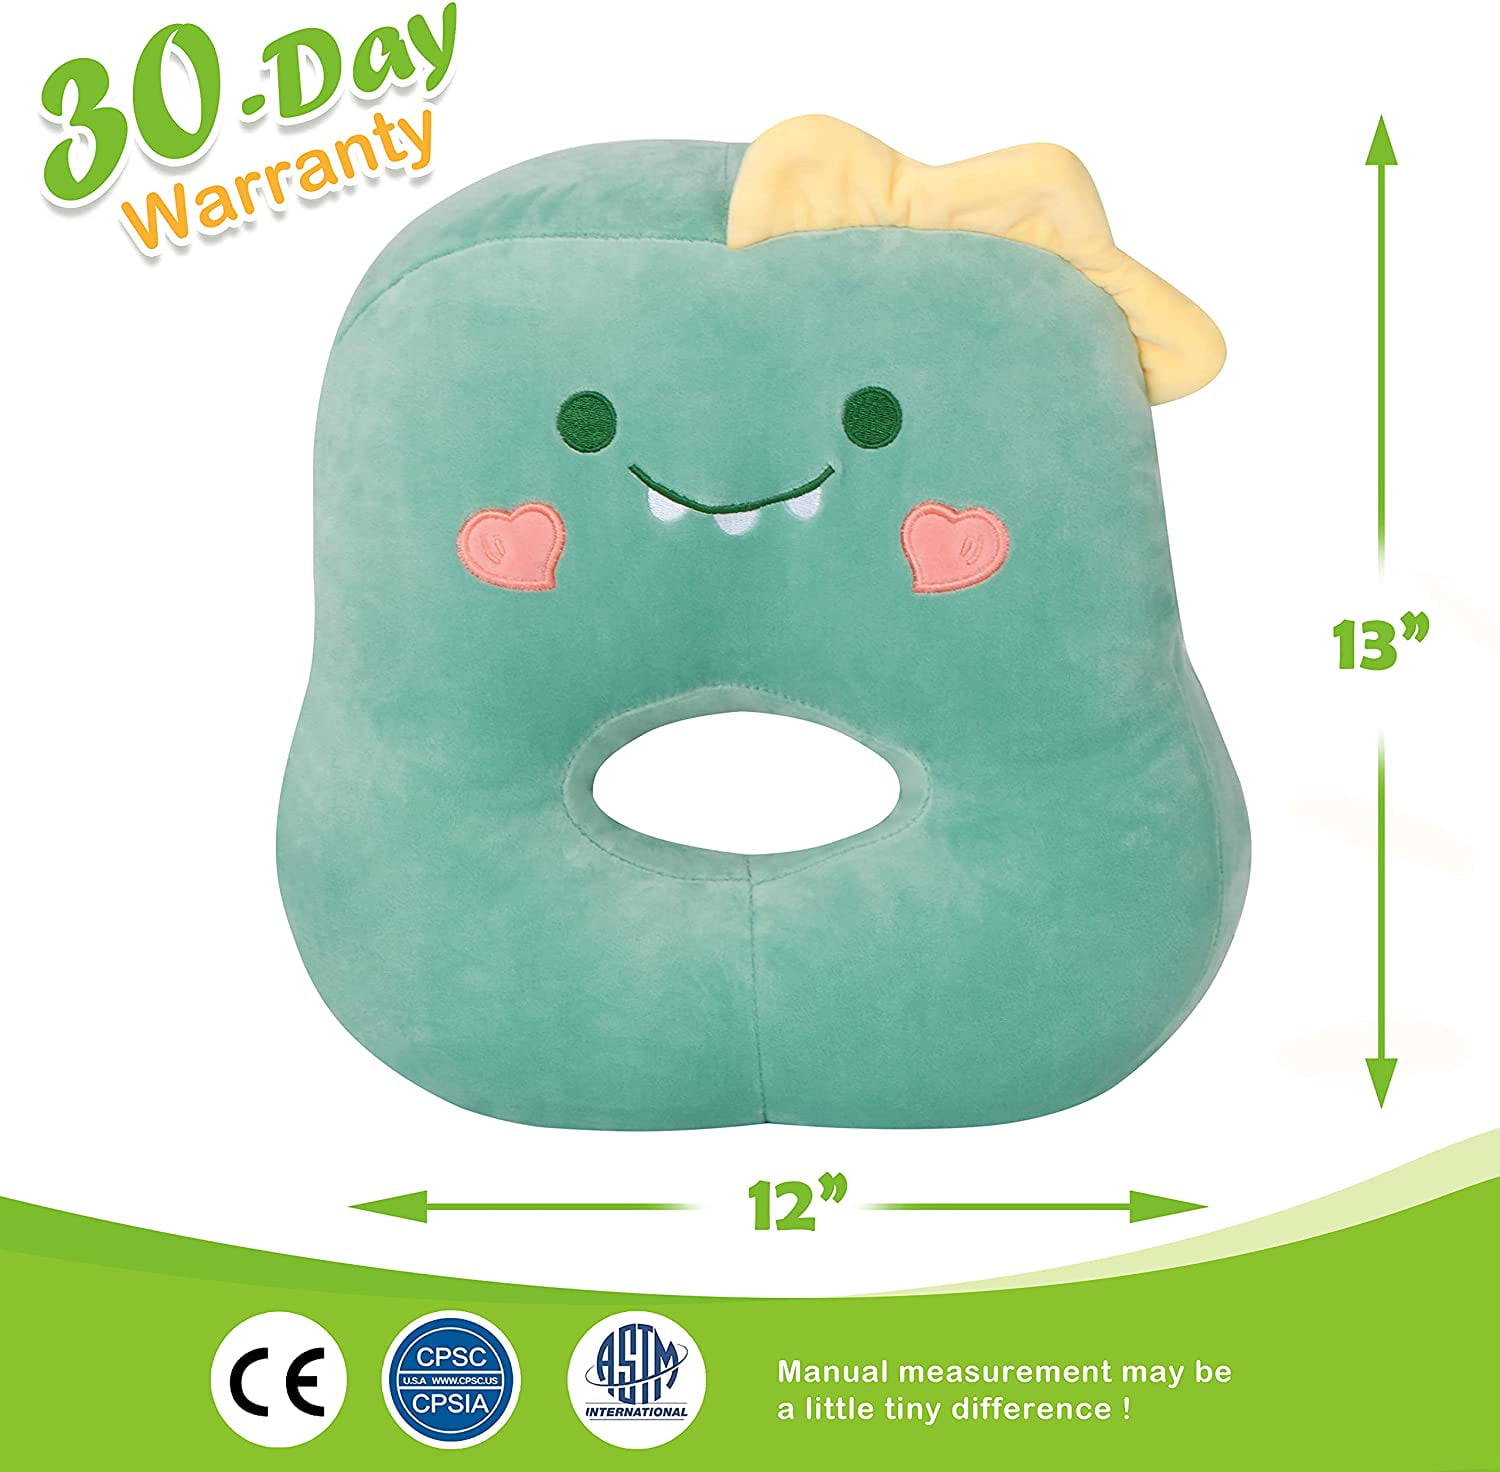 CozyWord 10’’ Dinosaur Hand Warmer Pet Pillow Cartoon Decorative Plush Hug Toy Cute Stuffed Animal for Home Office Birthday Gifts for Kids